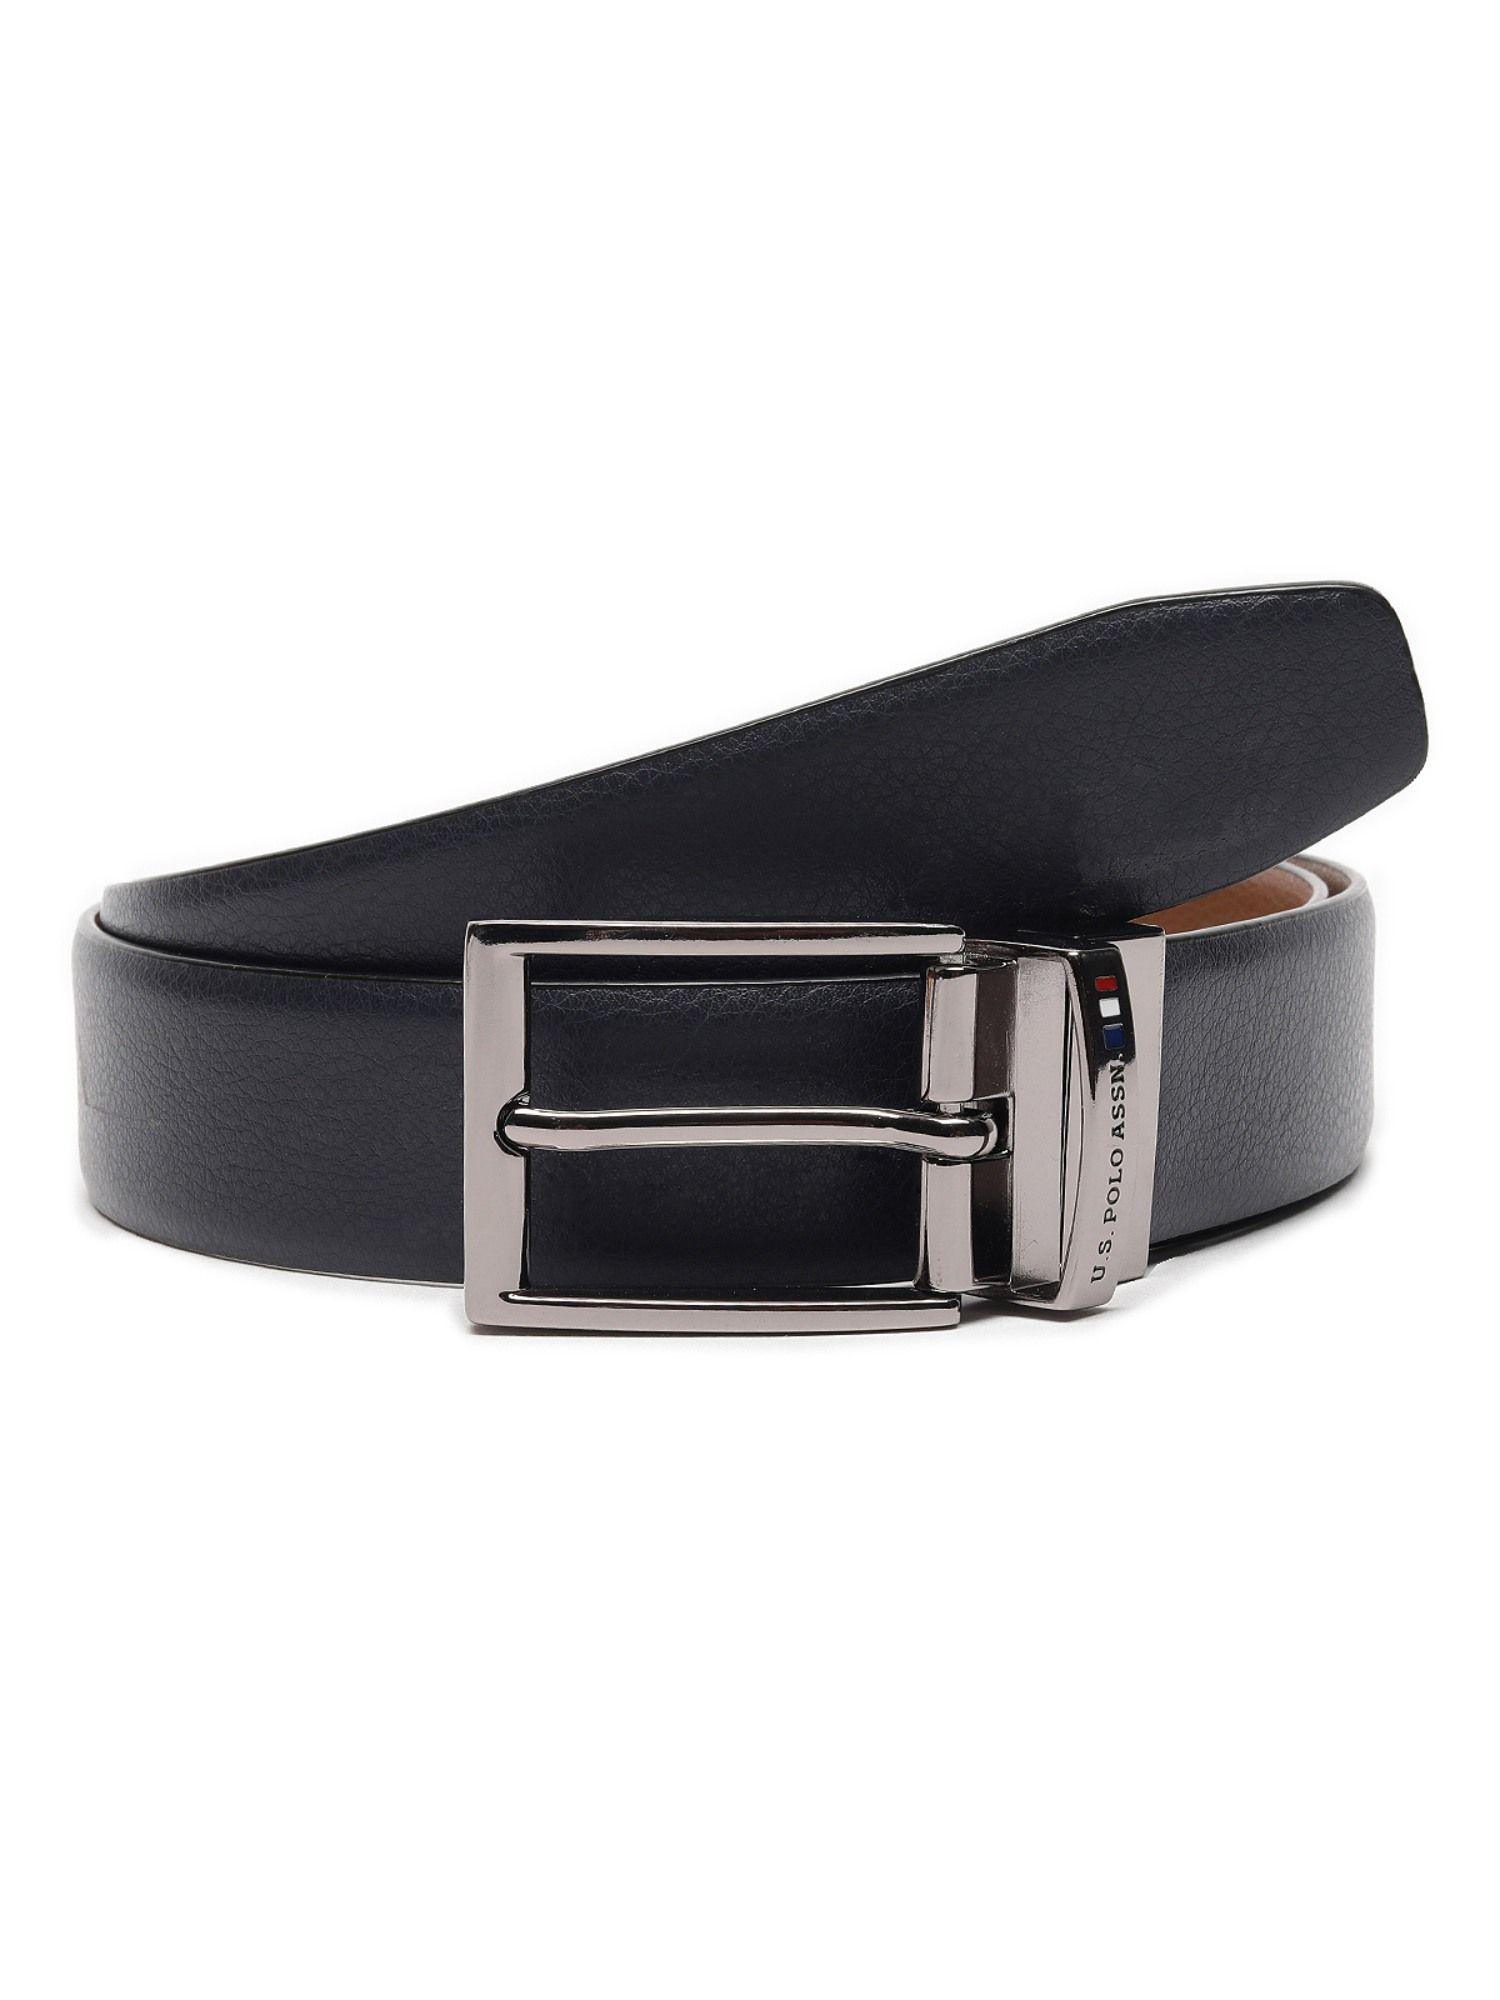 naples-men's-black-and-tan-reversible-belt